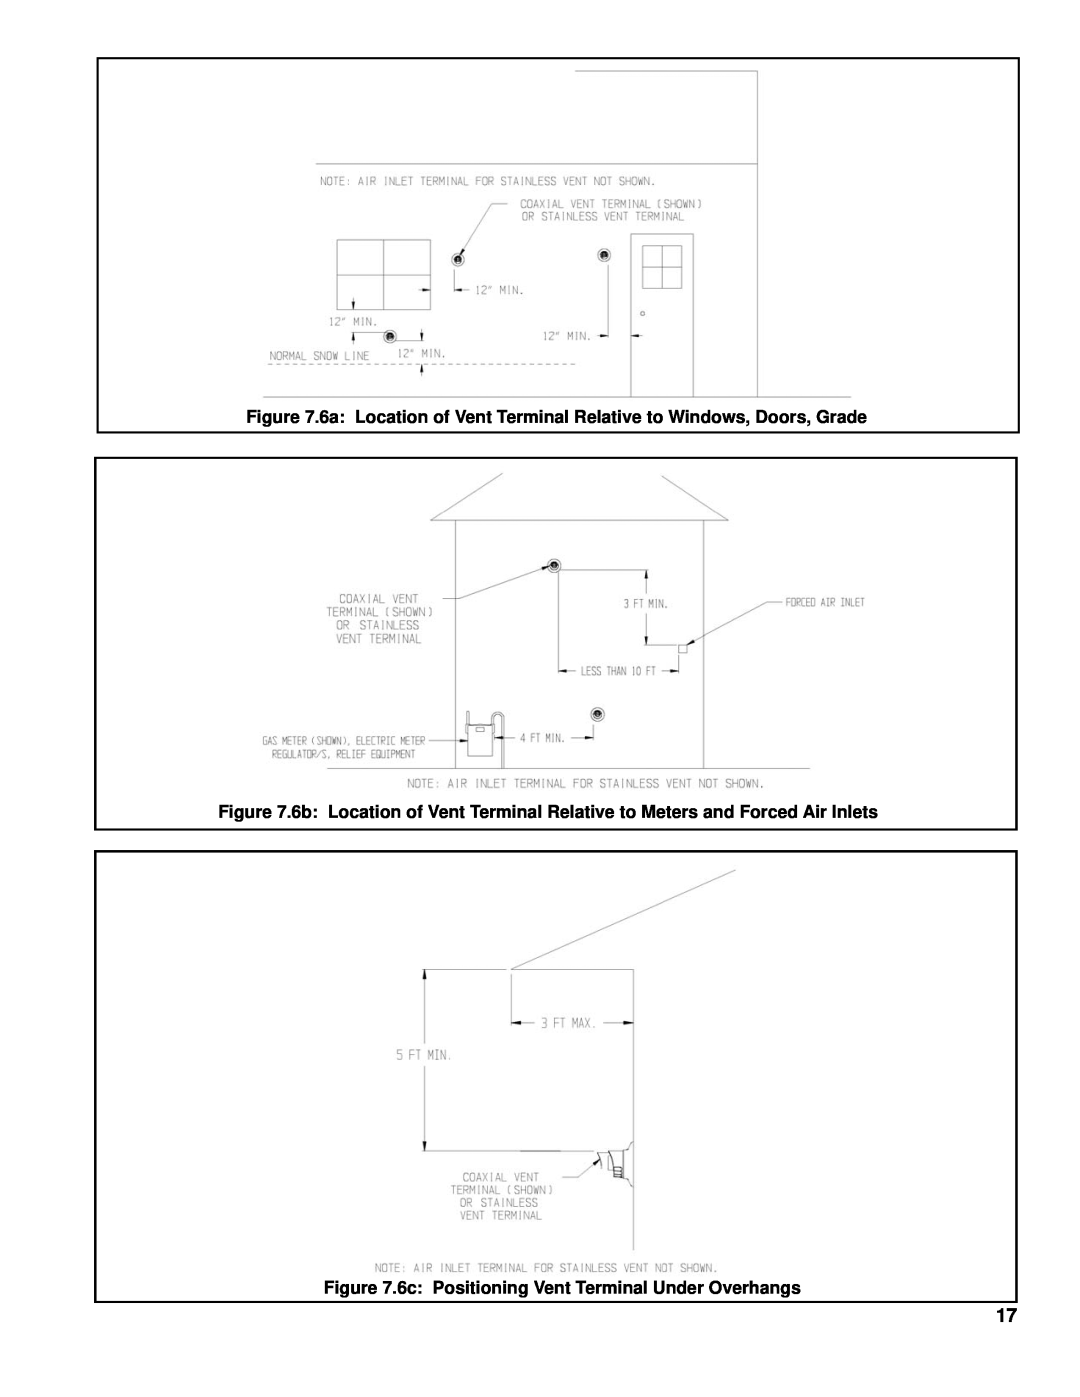 Burnham 101008-01R1-2/07 manual 6a Location of Vent Terminal Relative to Windows, Doors, Grade 